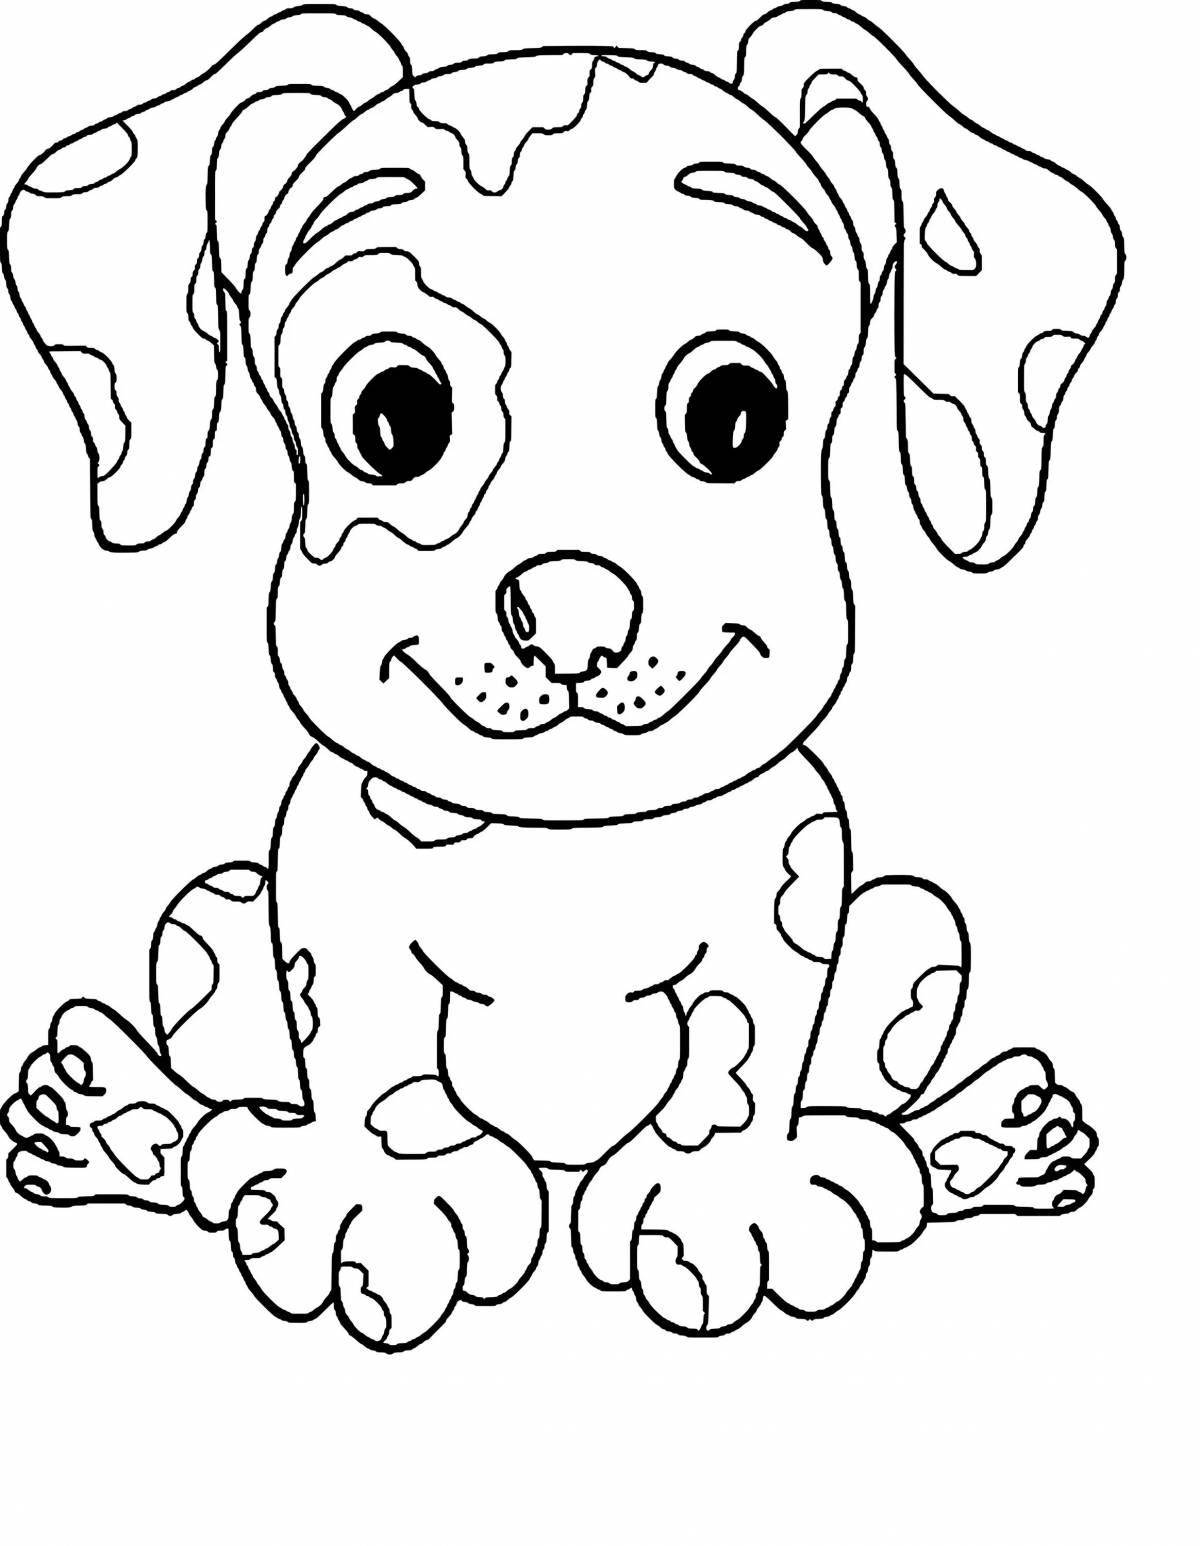 Adorable cute dog coloring book